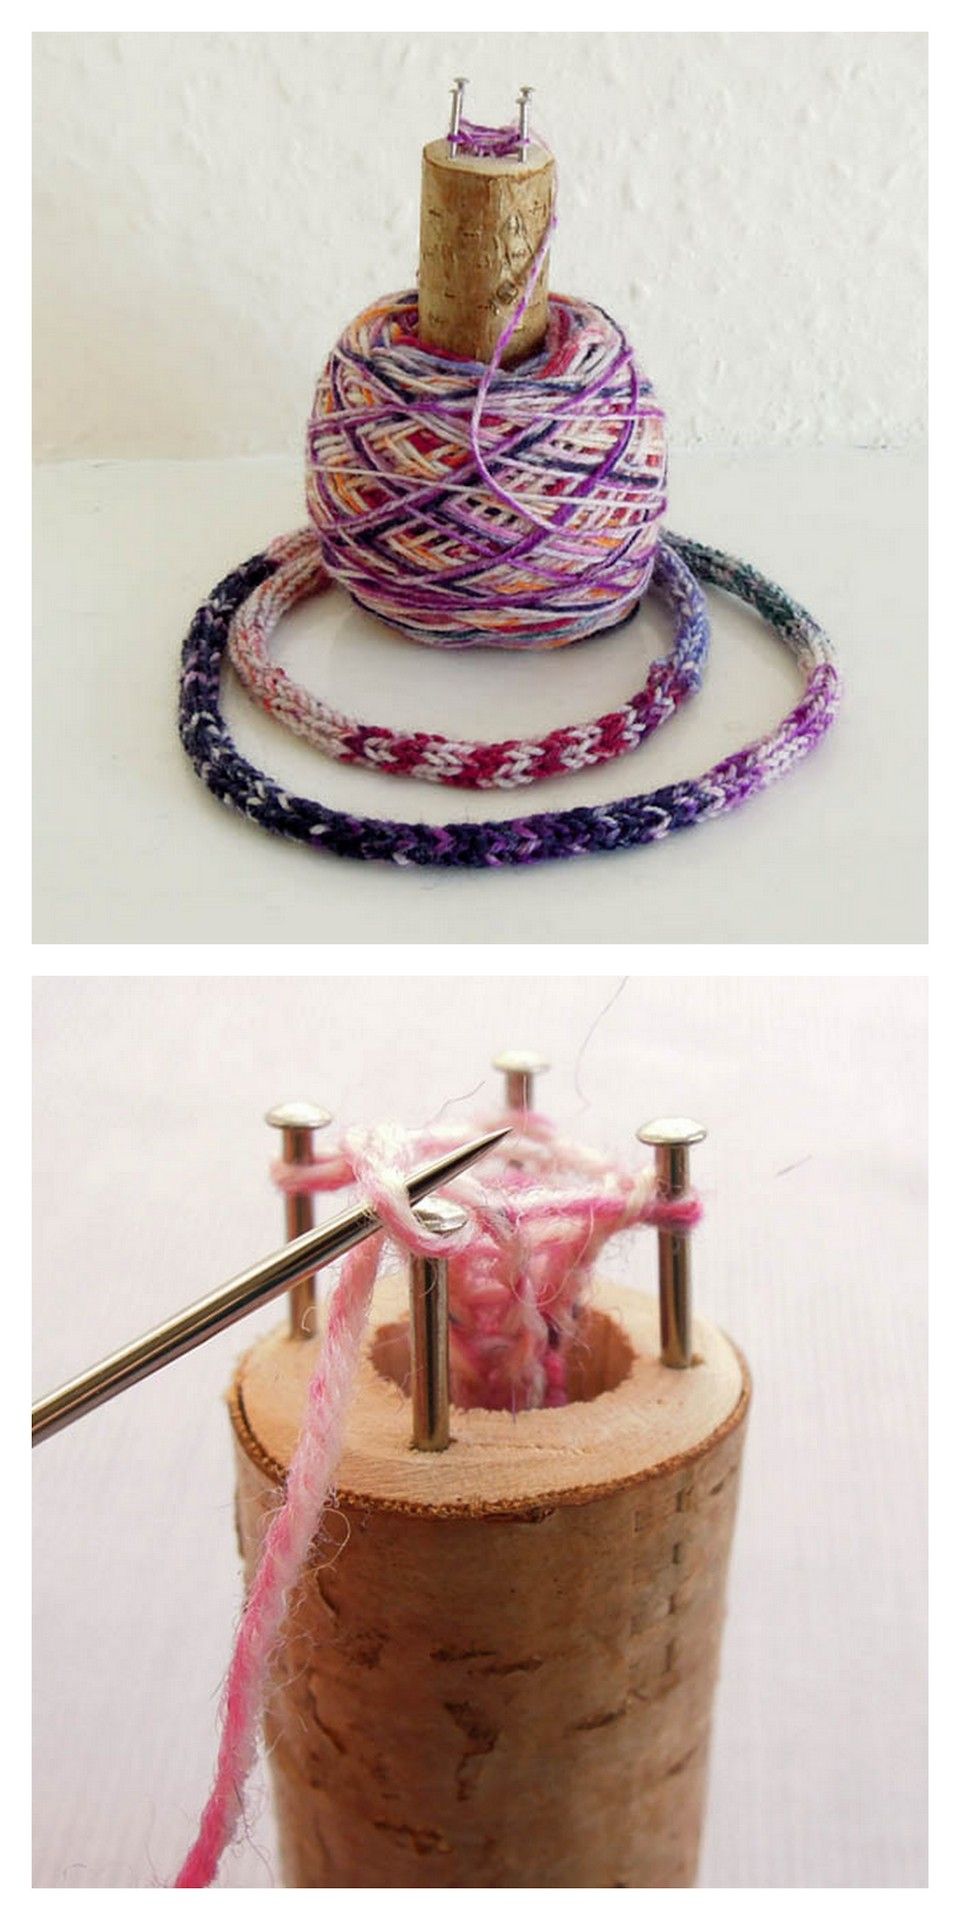 spool knitting instructions for kids